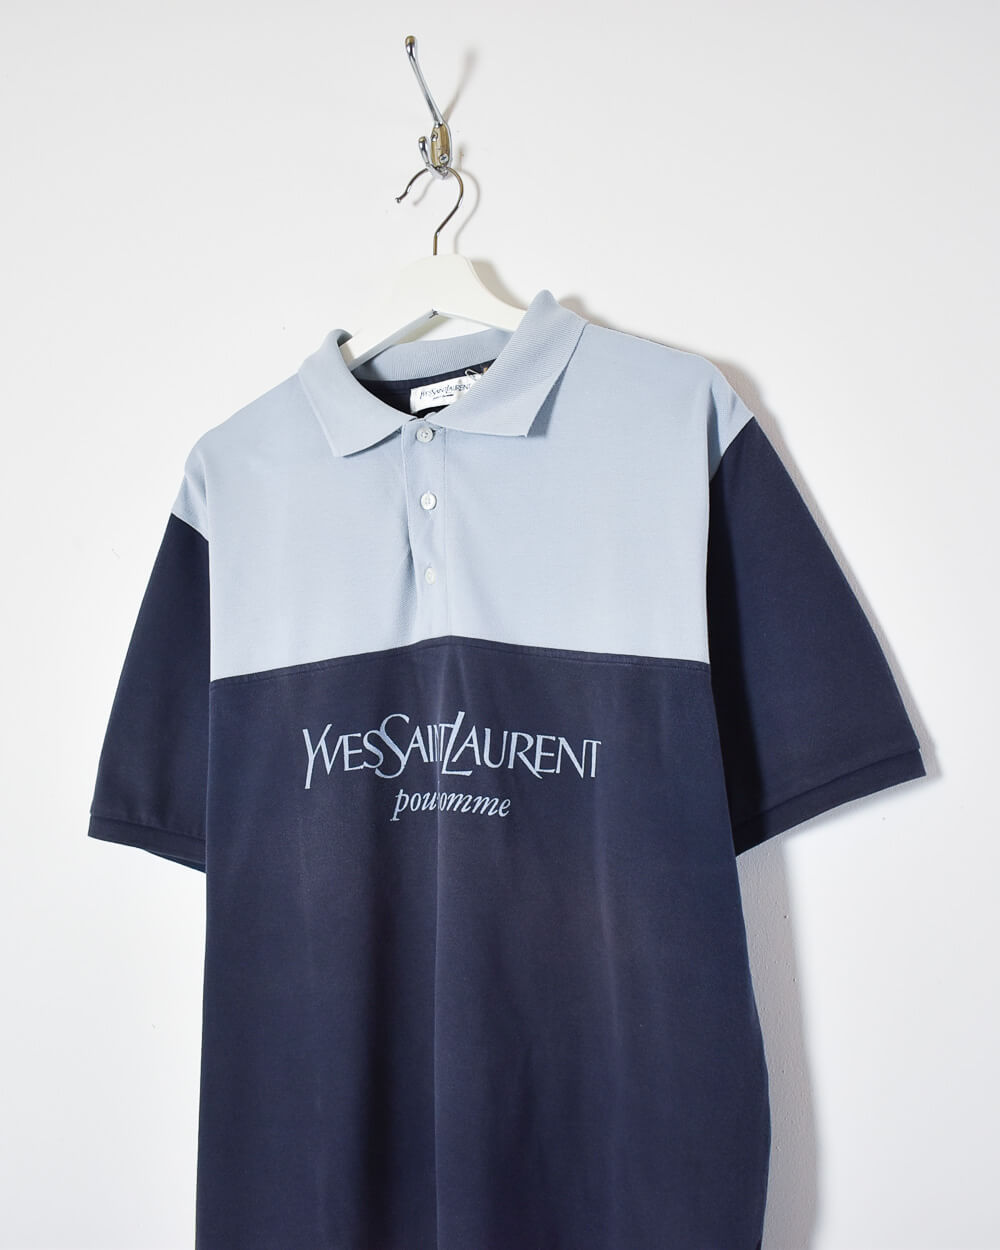 Navy Yves Saint Laurent Polo Shirt - X-Large